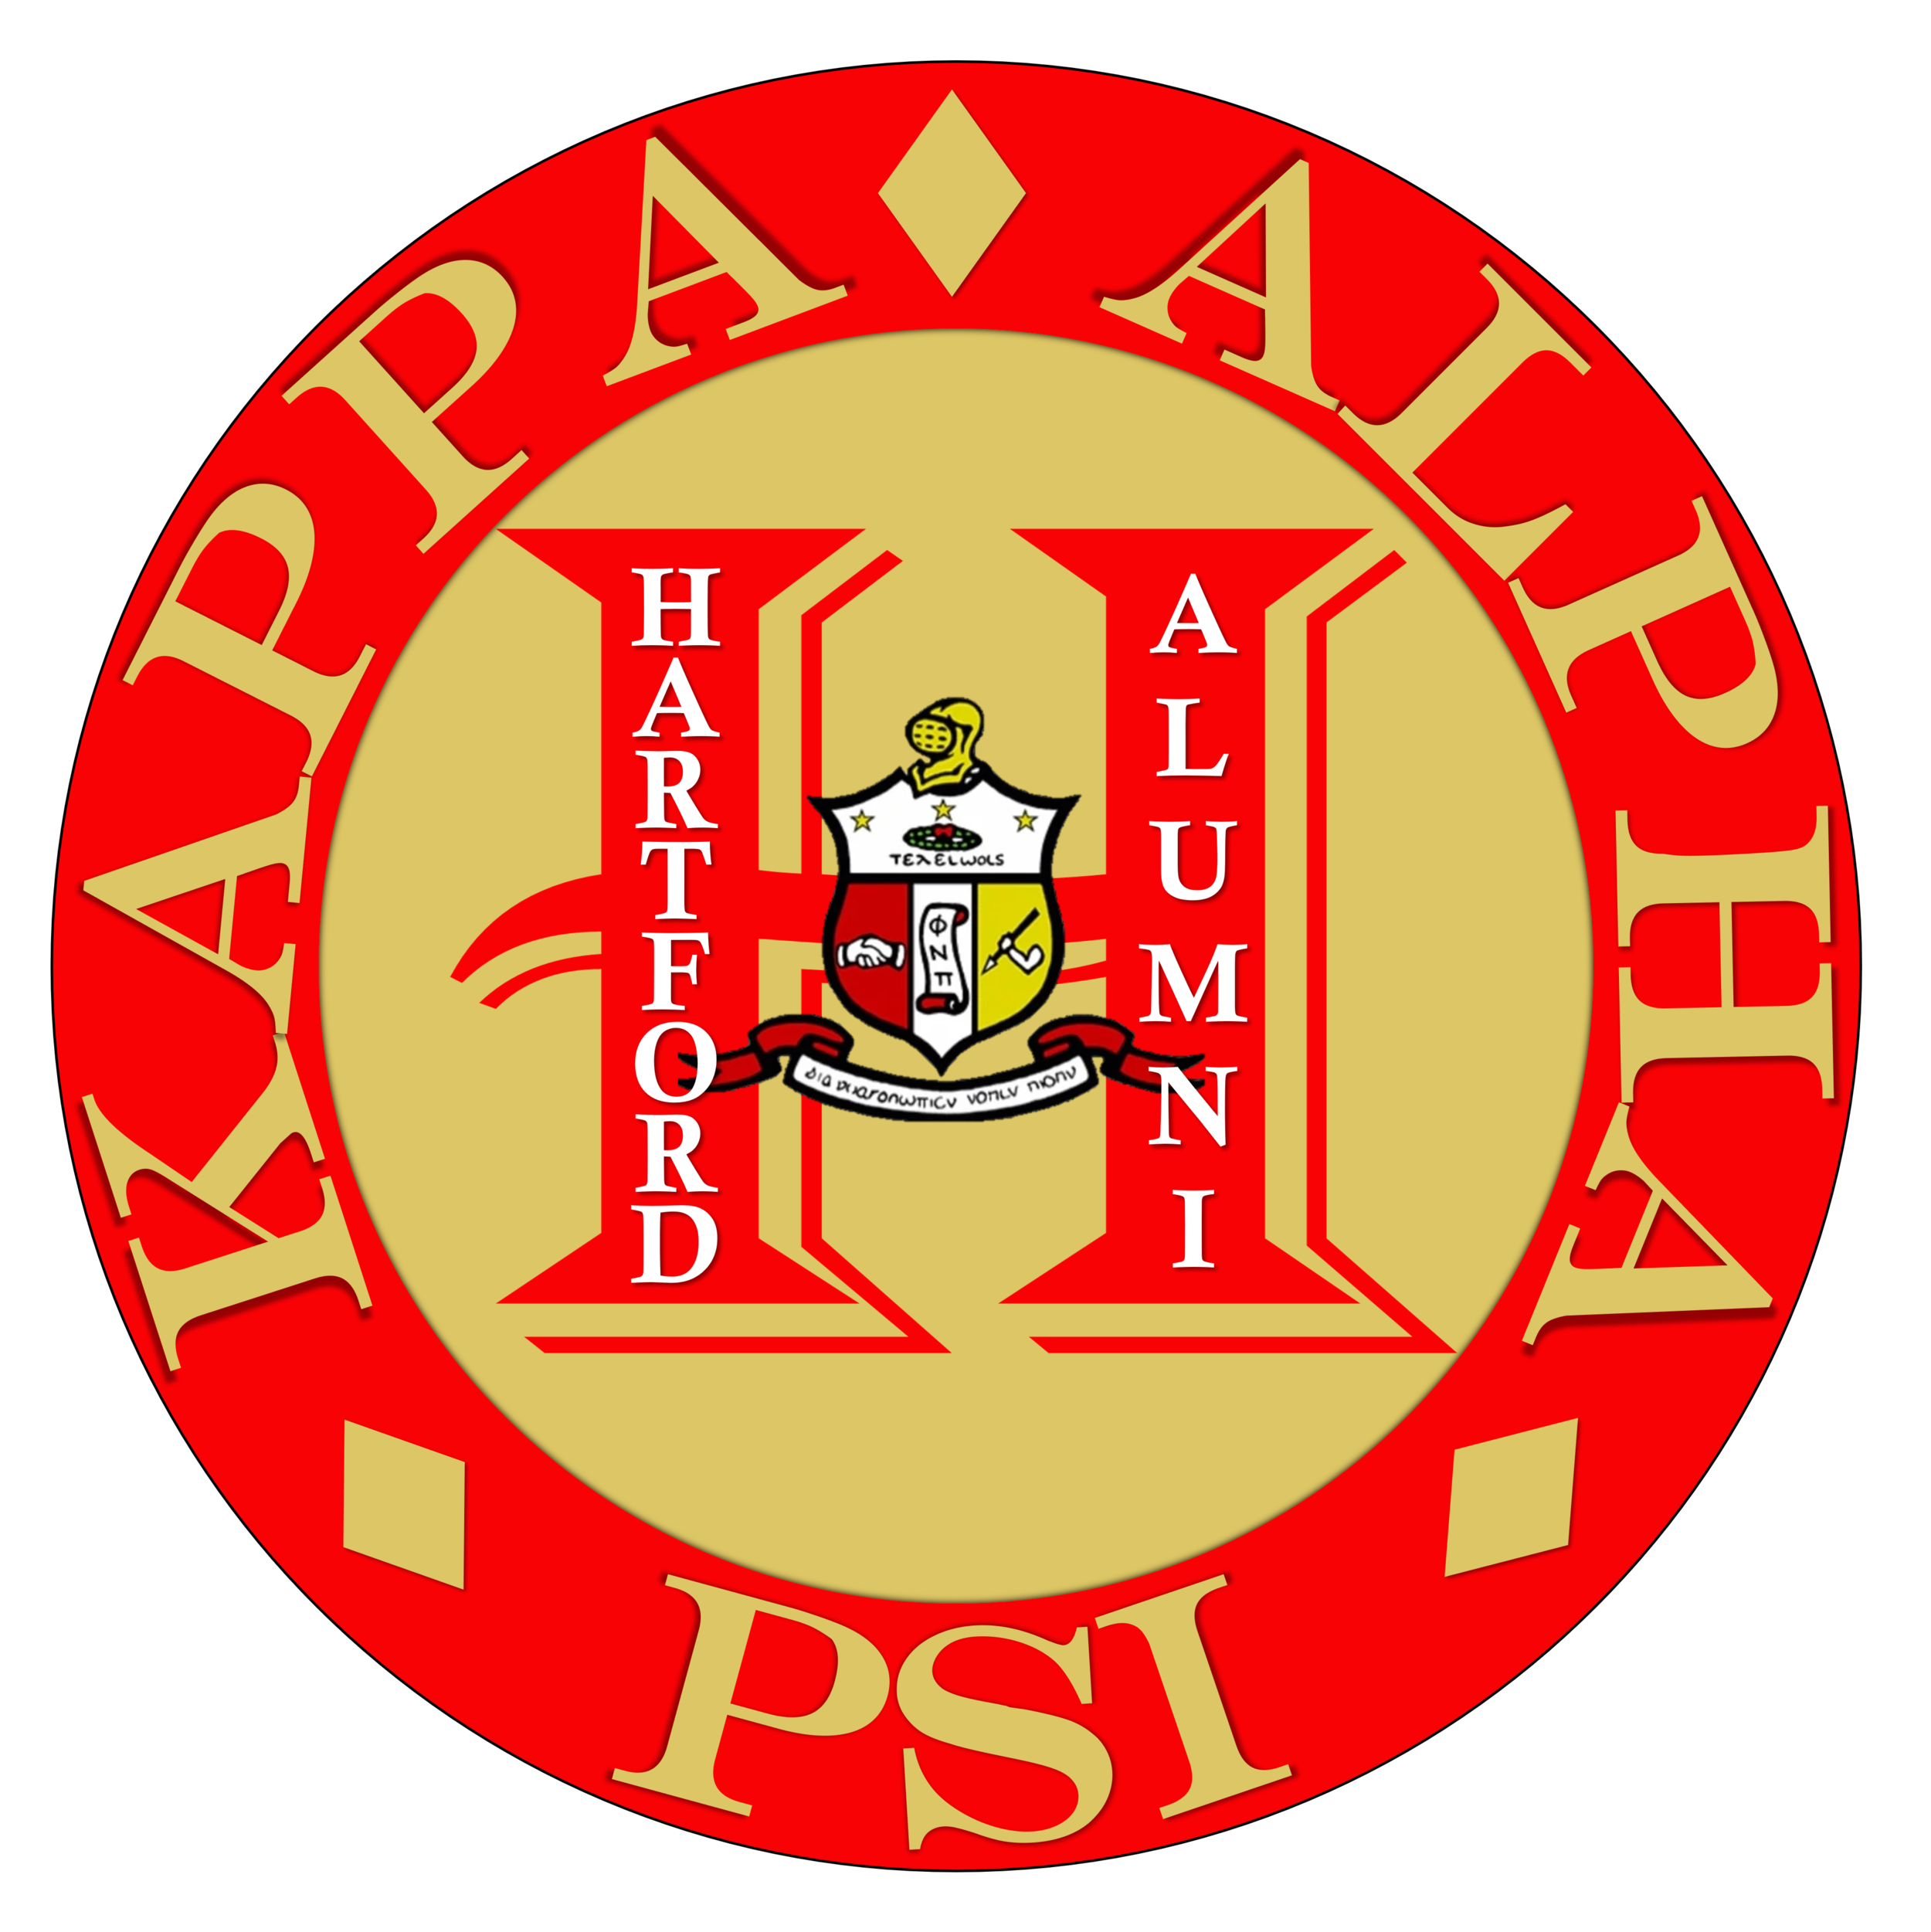 Hartford Alumni Chapter of Kappa Alpha Psi Fraternity, Inc.